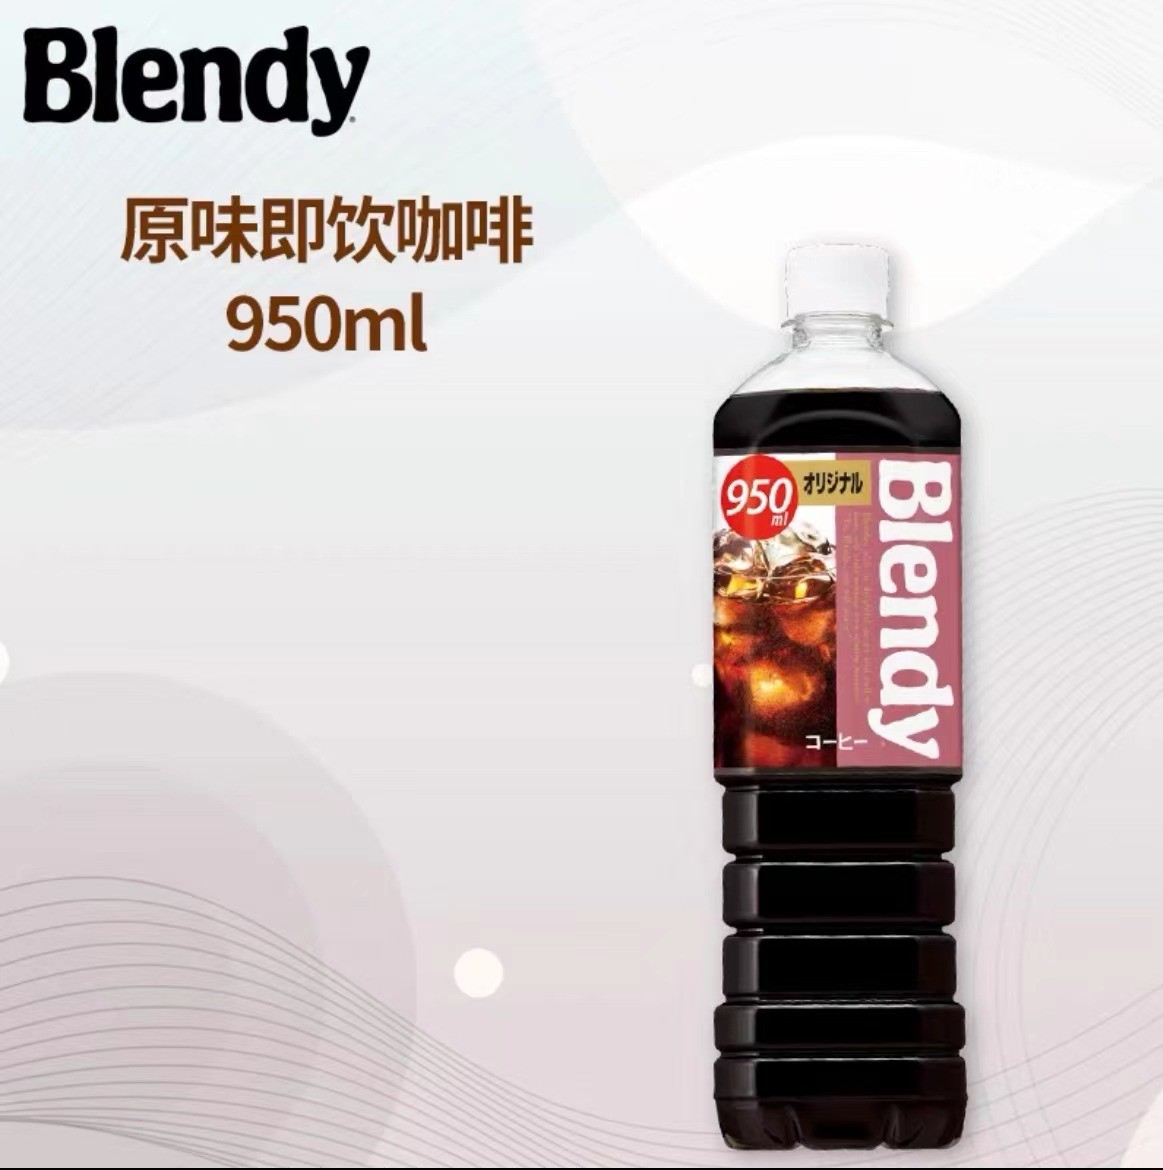 blendy-bottled-coffee-original